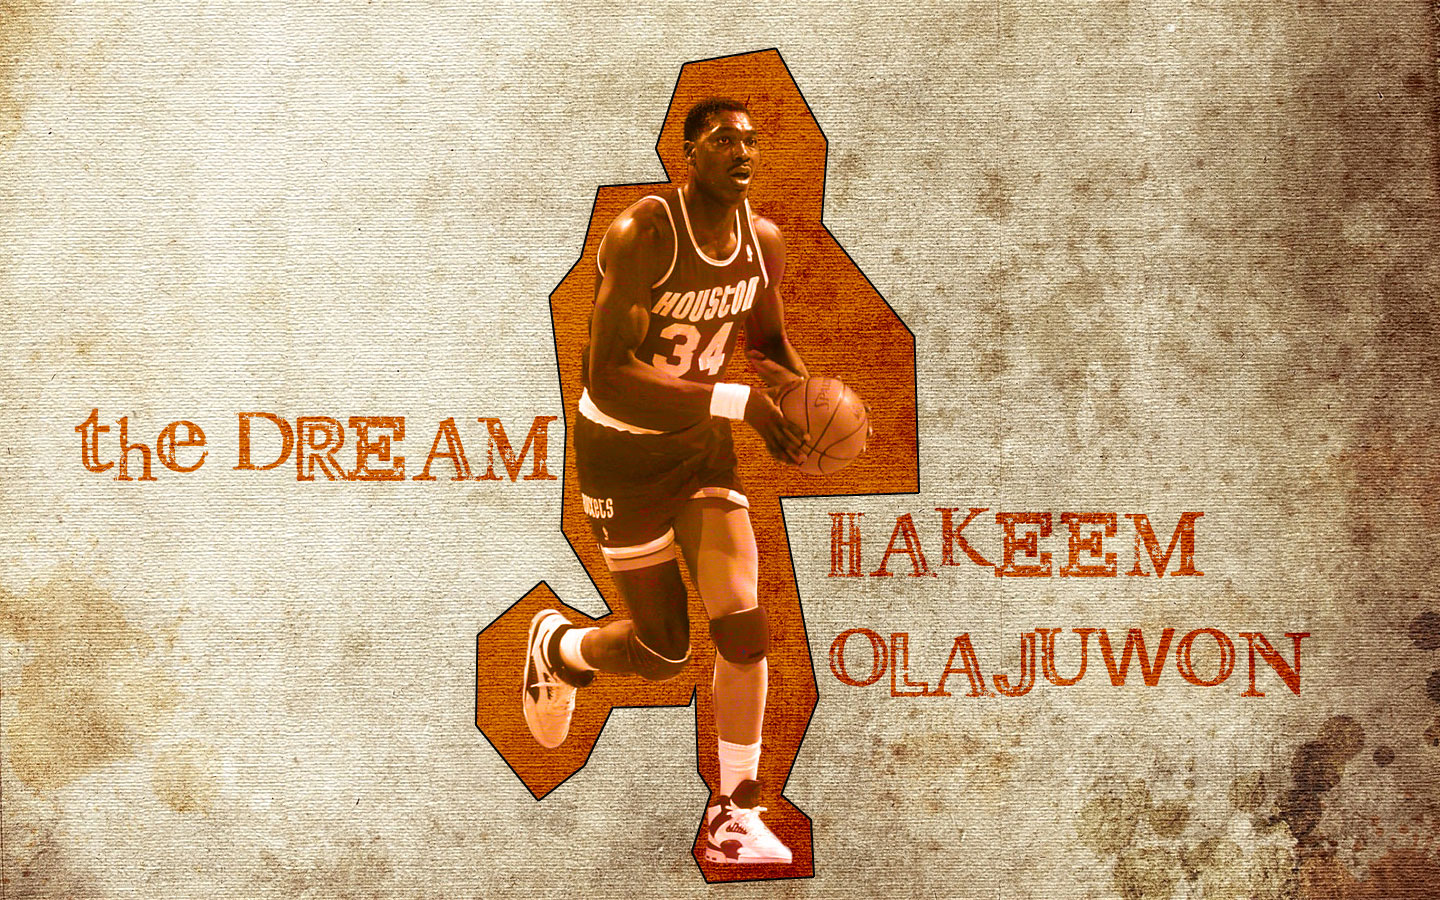 Hakeem The Dream Olajuwon Wallpaper | Basketball Wallpapers at